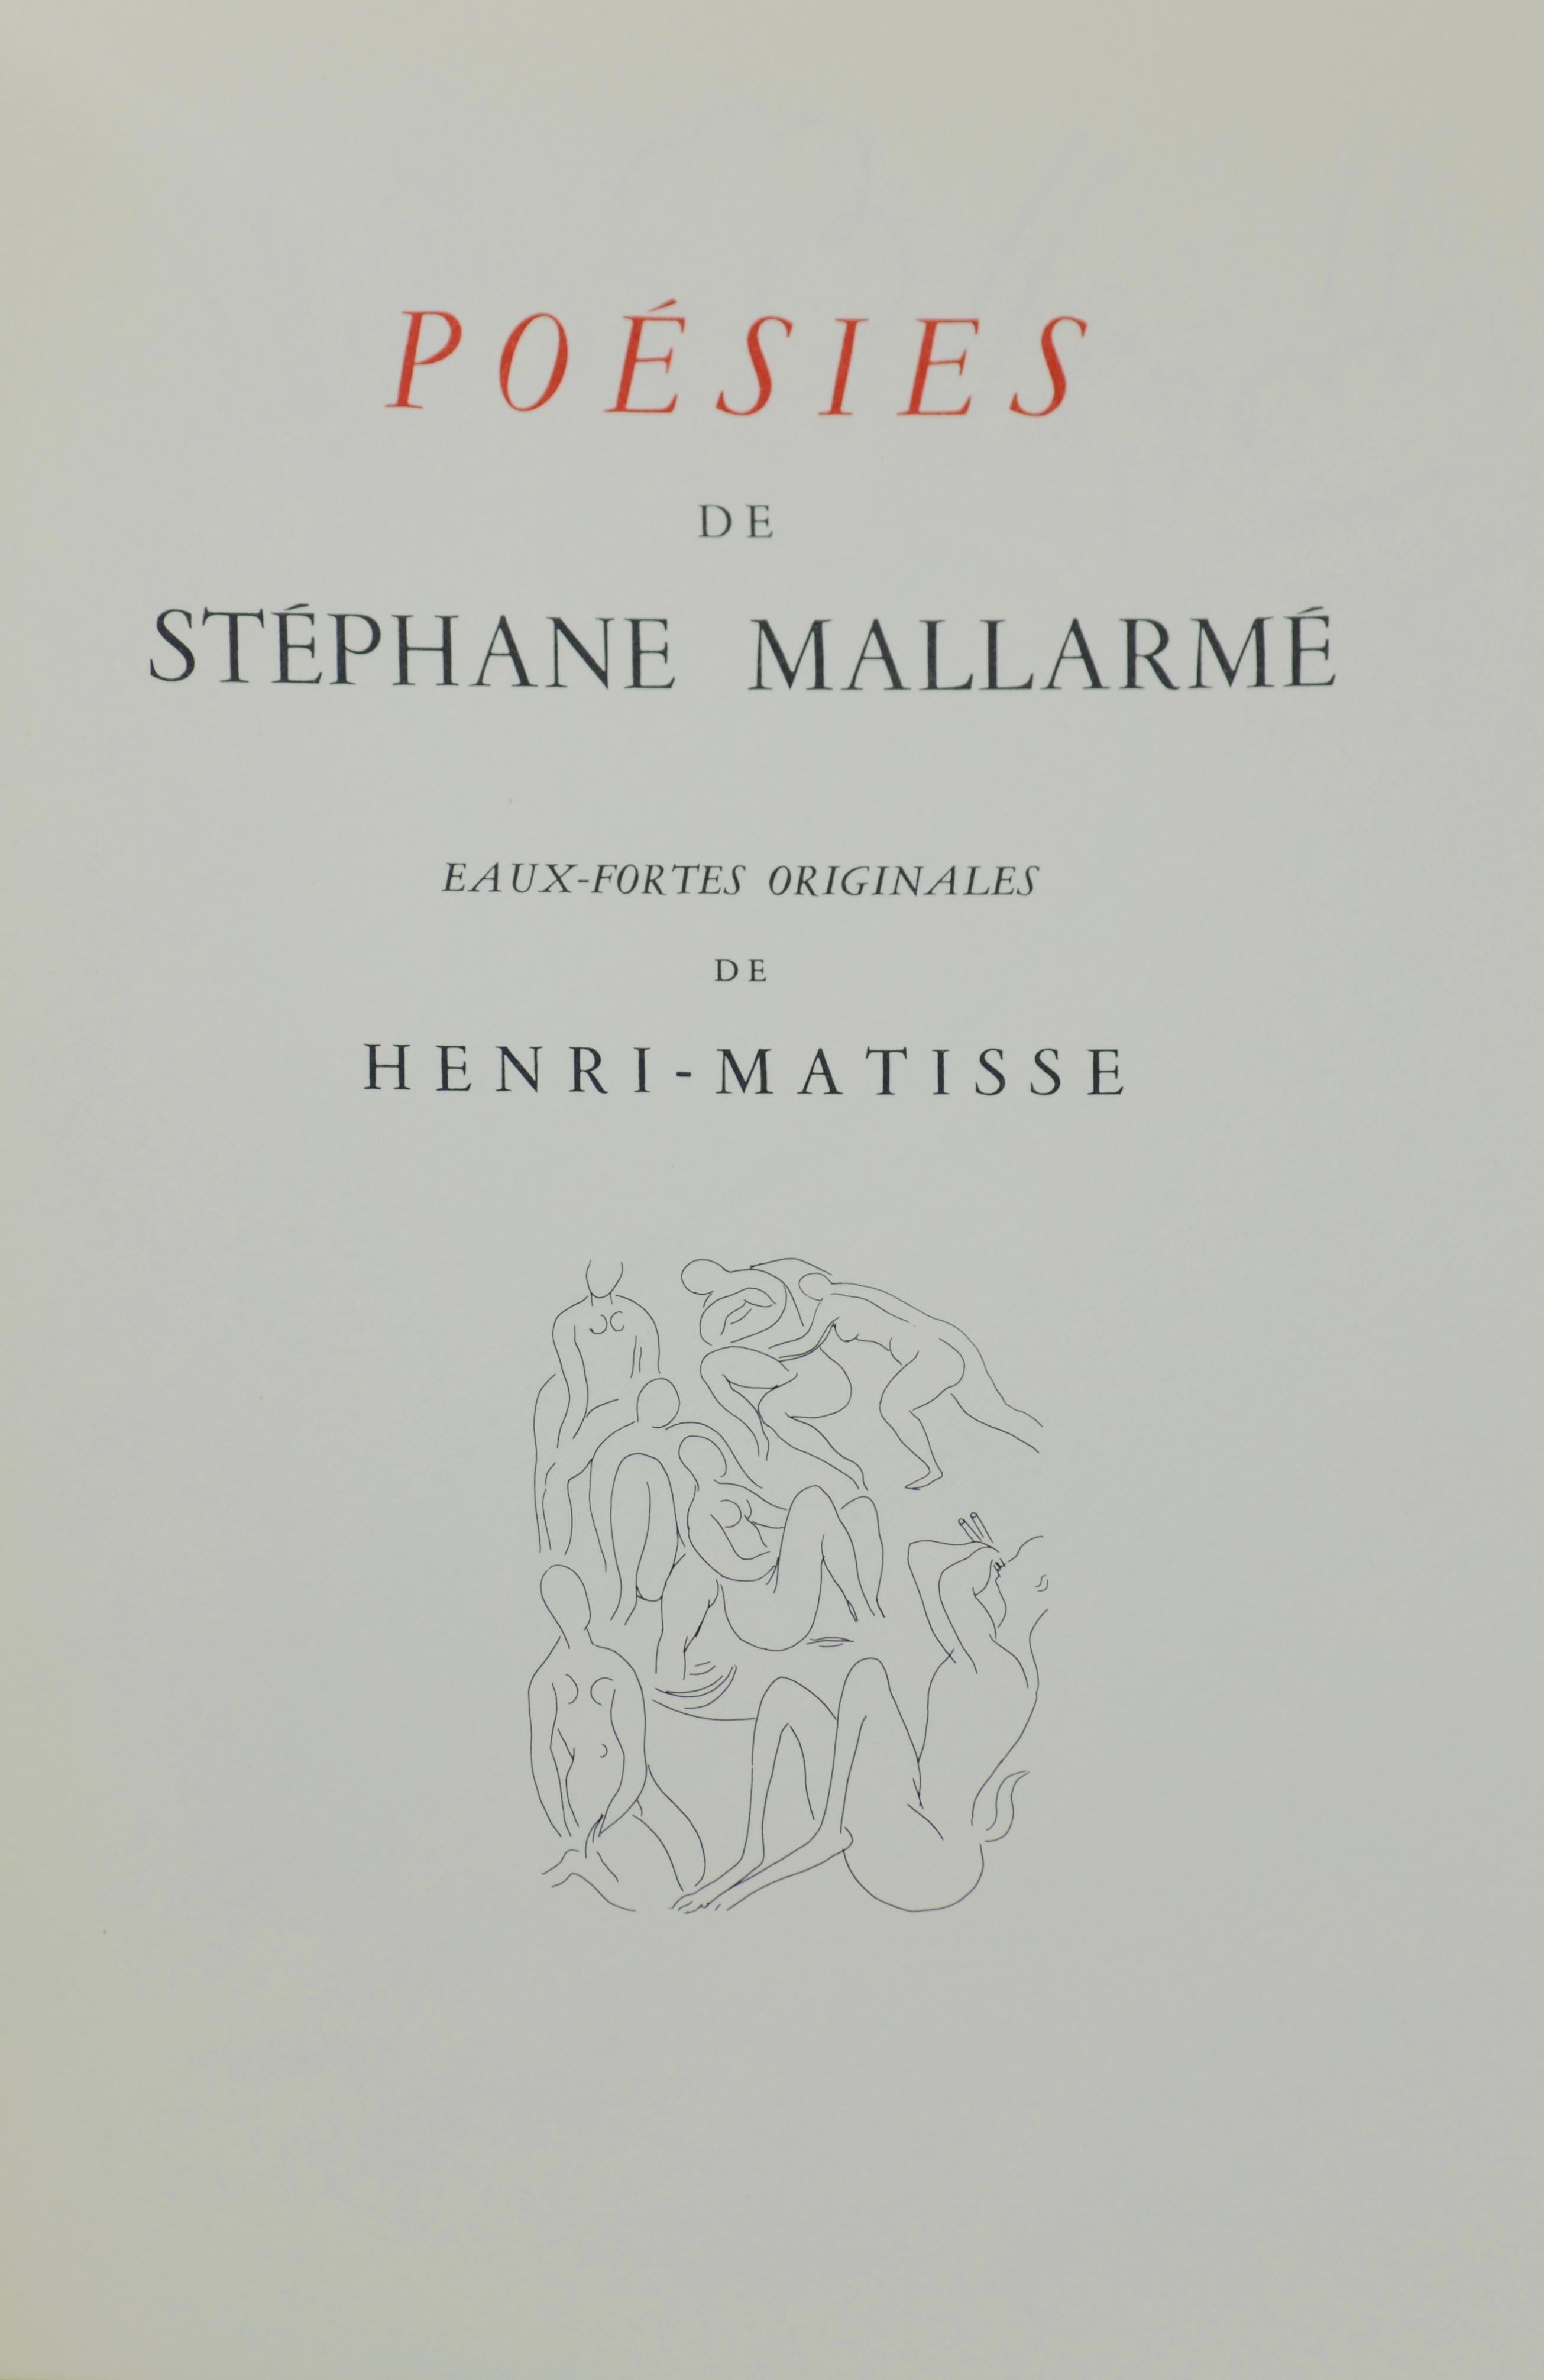 Matisse, La coiffure d'Hérodiade (Herodotus' Coiffure), Poésies (after) For Sale 1